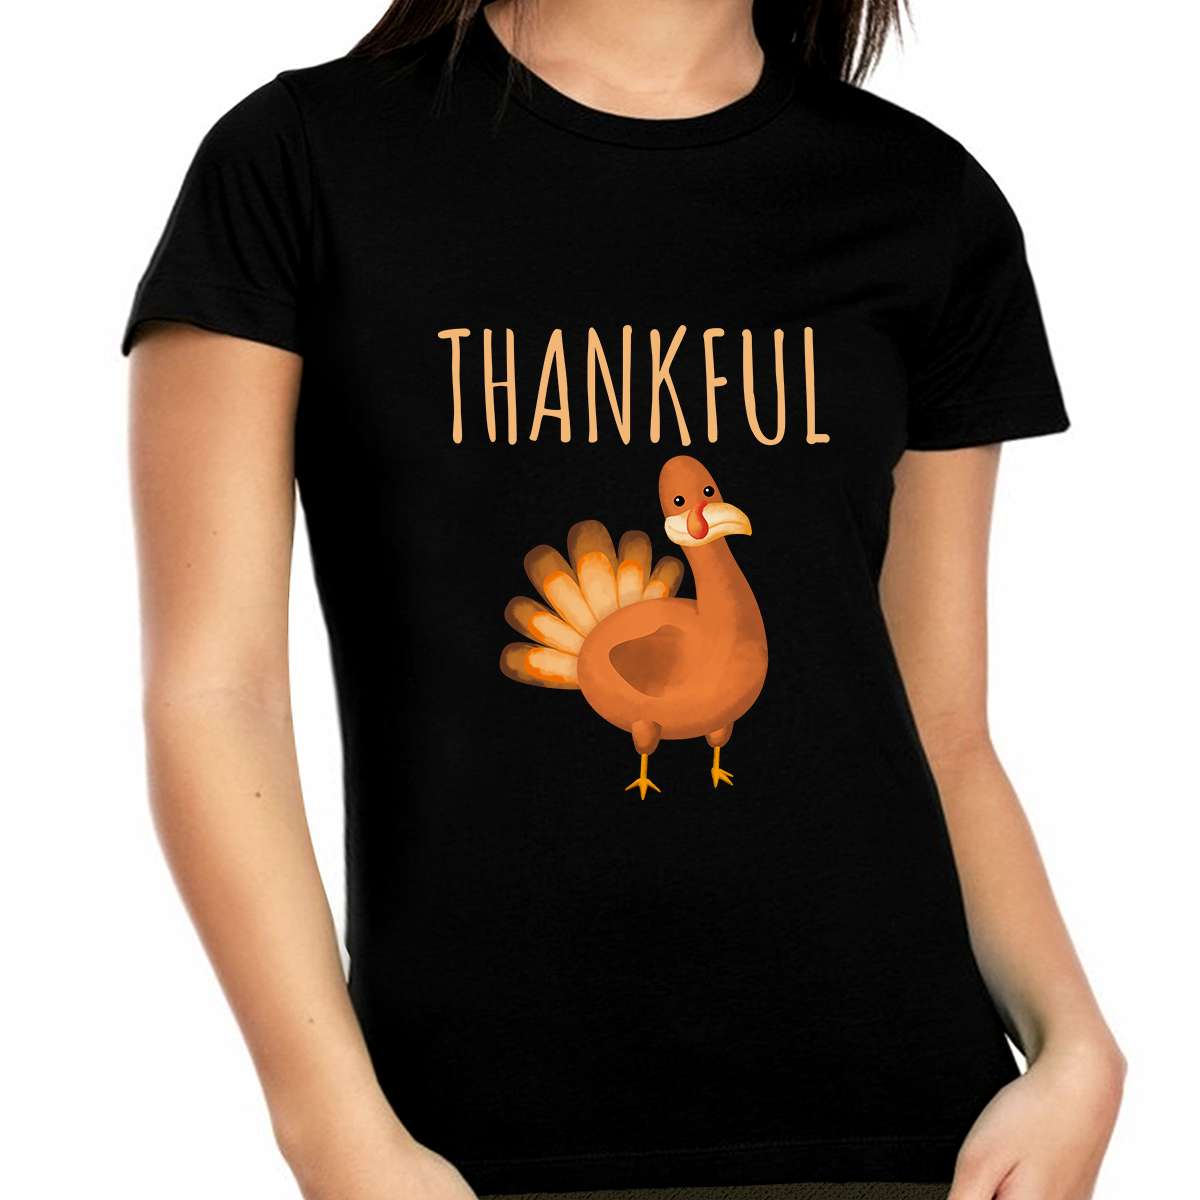 Funny Thanksgiving Shirts for Women Plus Size 1X 2X 3X 4X 5X Funny